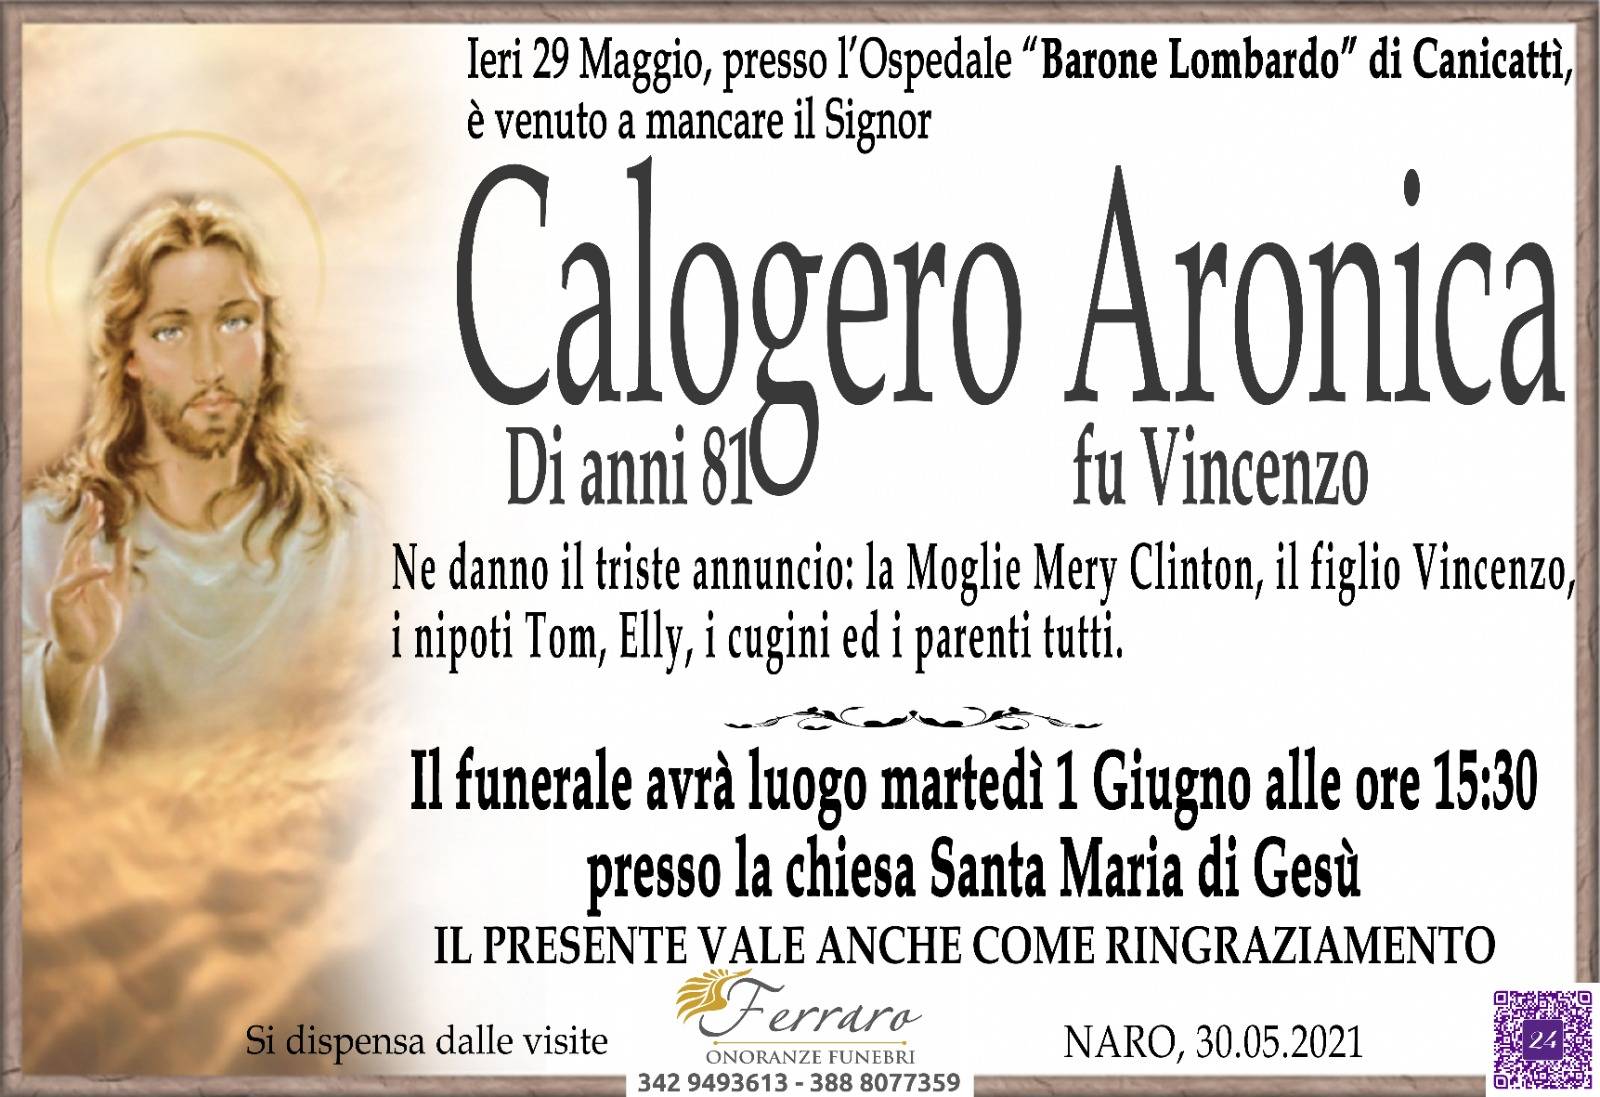 Calogero Aronica